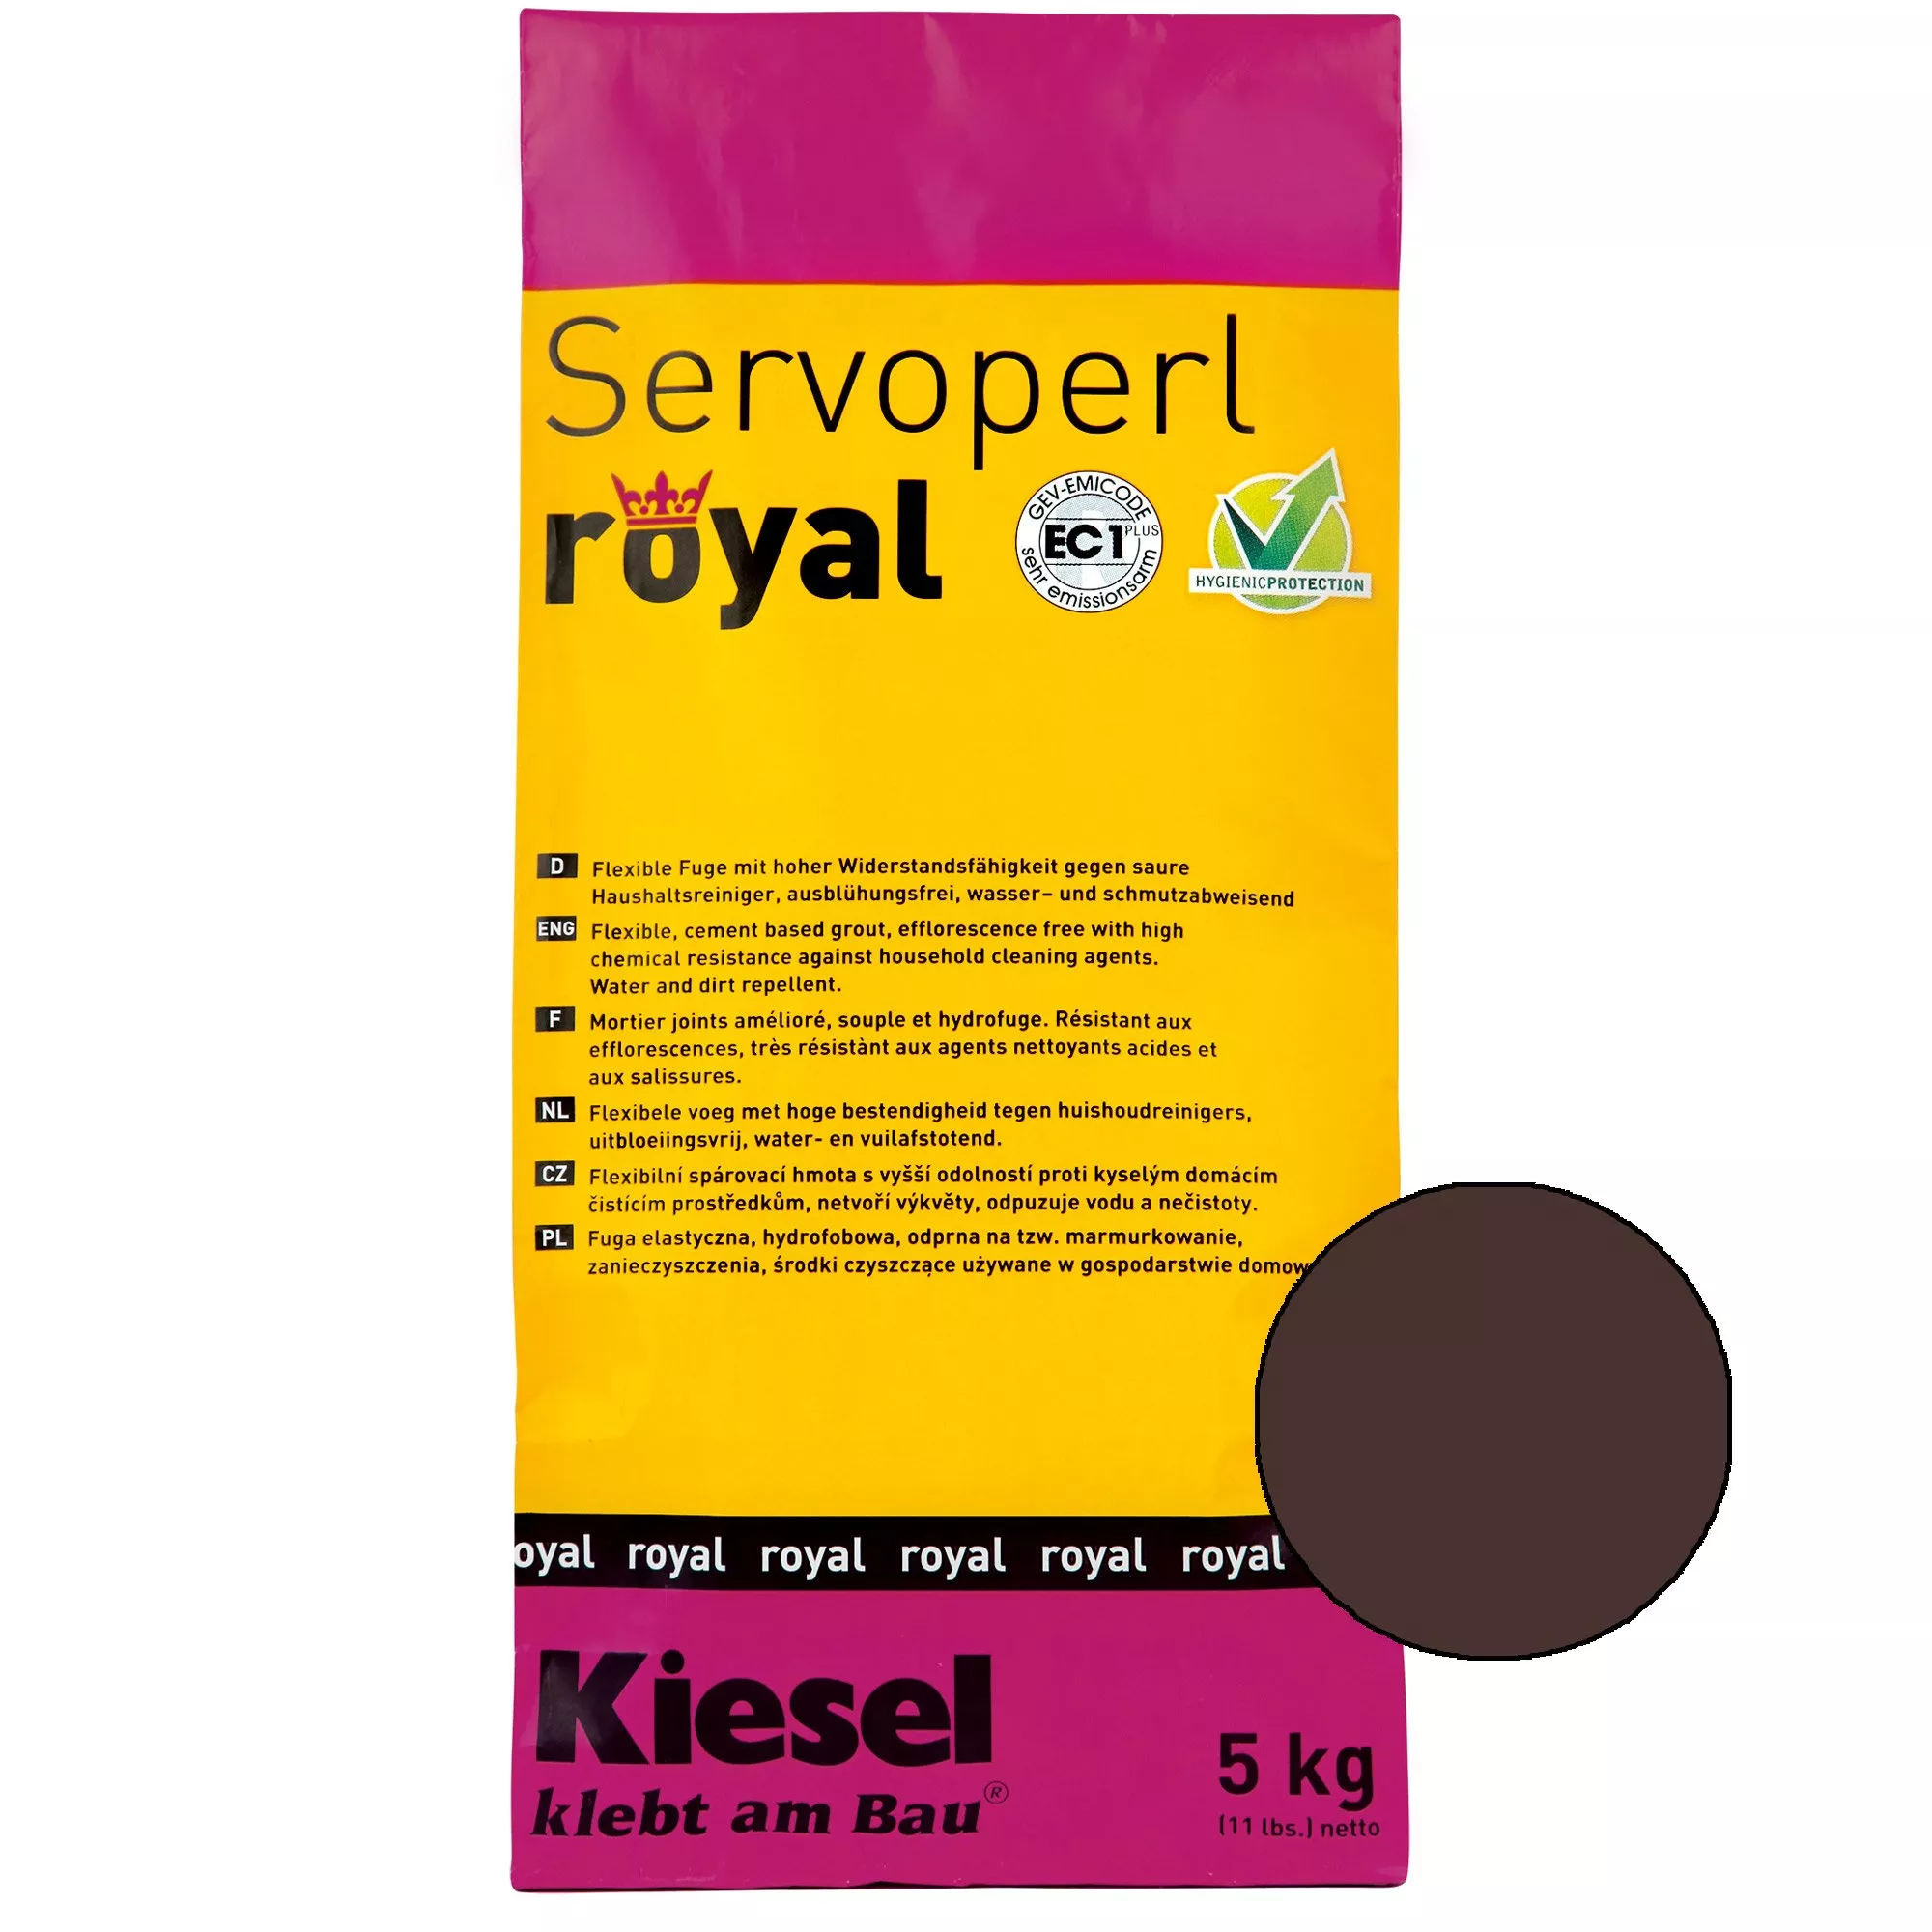 Kiesel Servoperl royal - flexible, water- and dirt-repellent joint (5KG Bali brown)